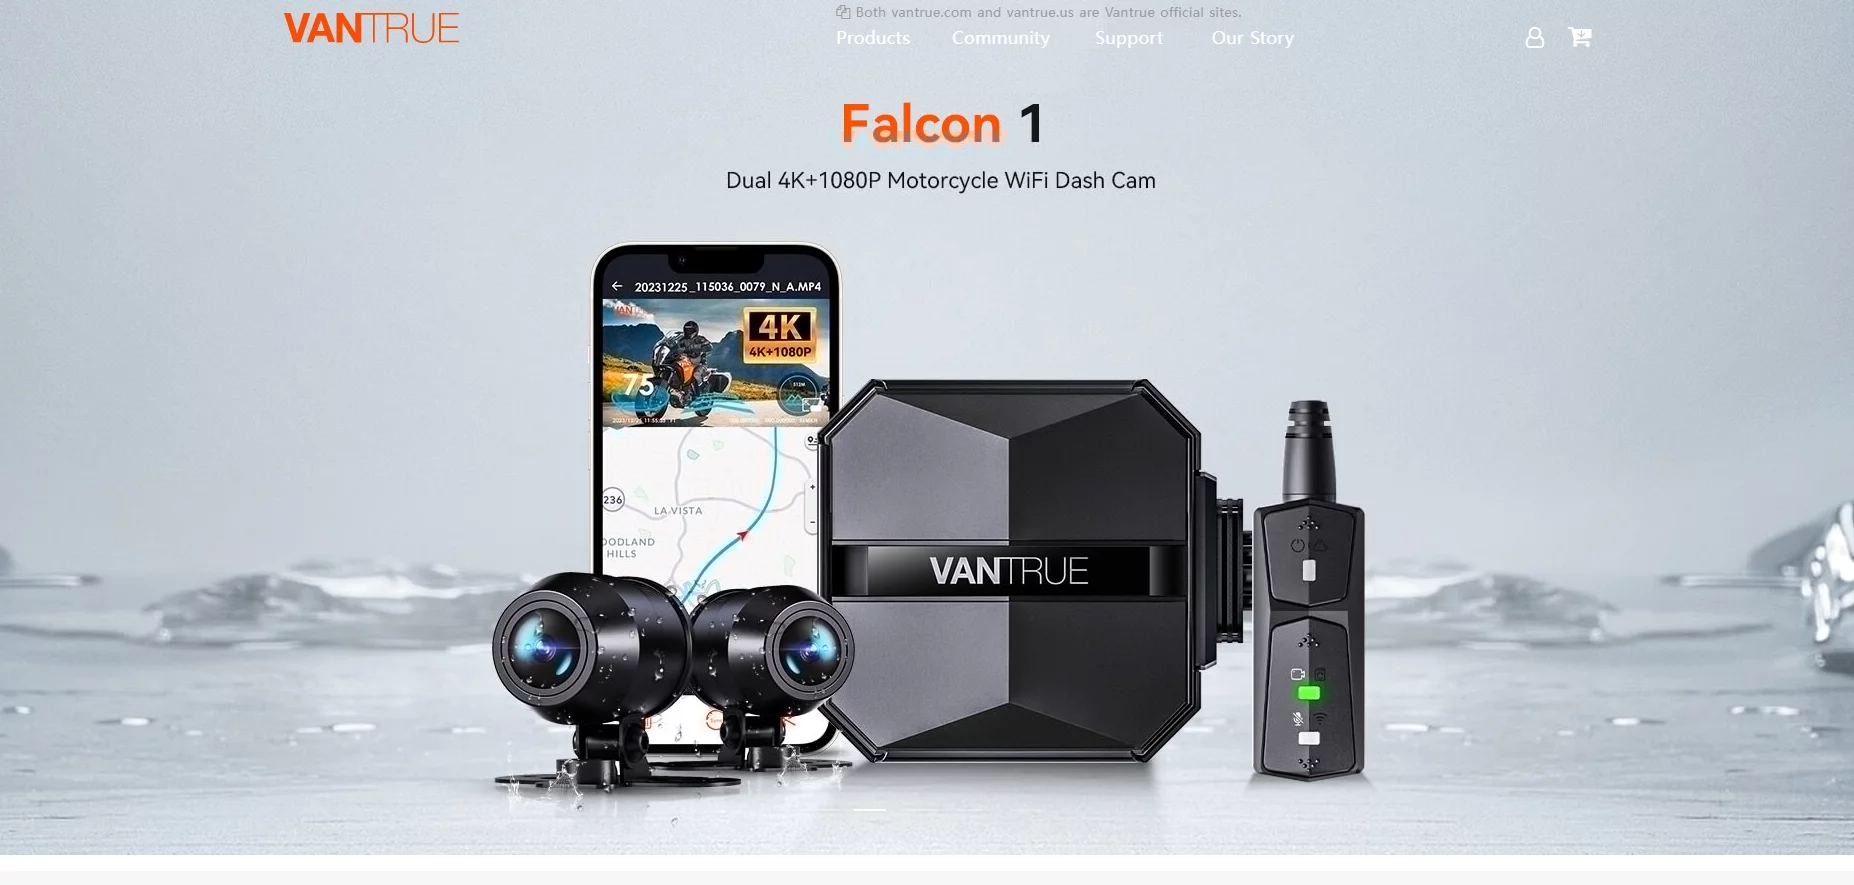 Best Dashcam and Accessories Dropshipping Suppliers 4: Vantrue